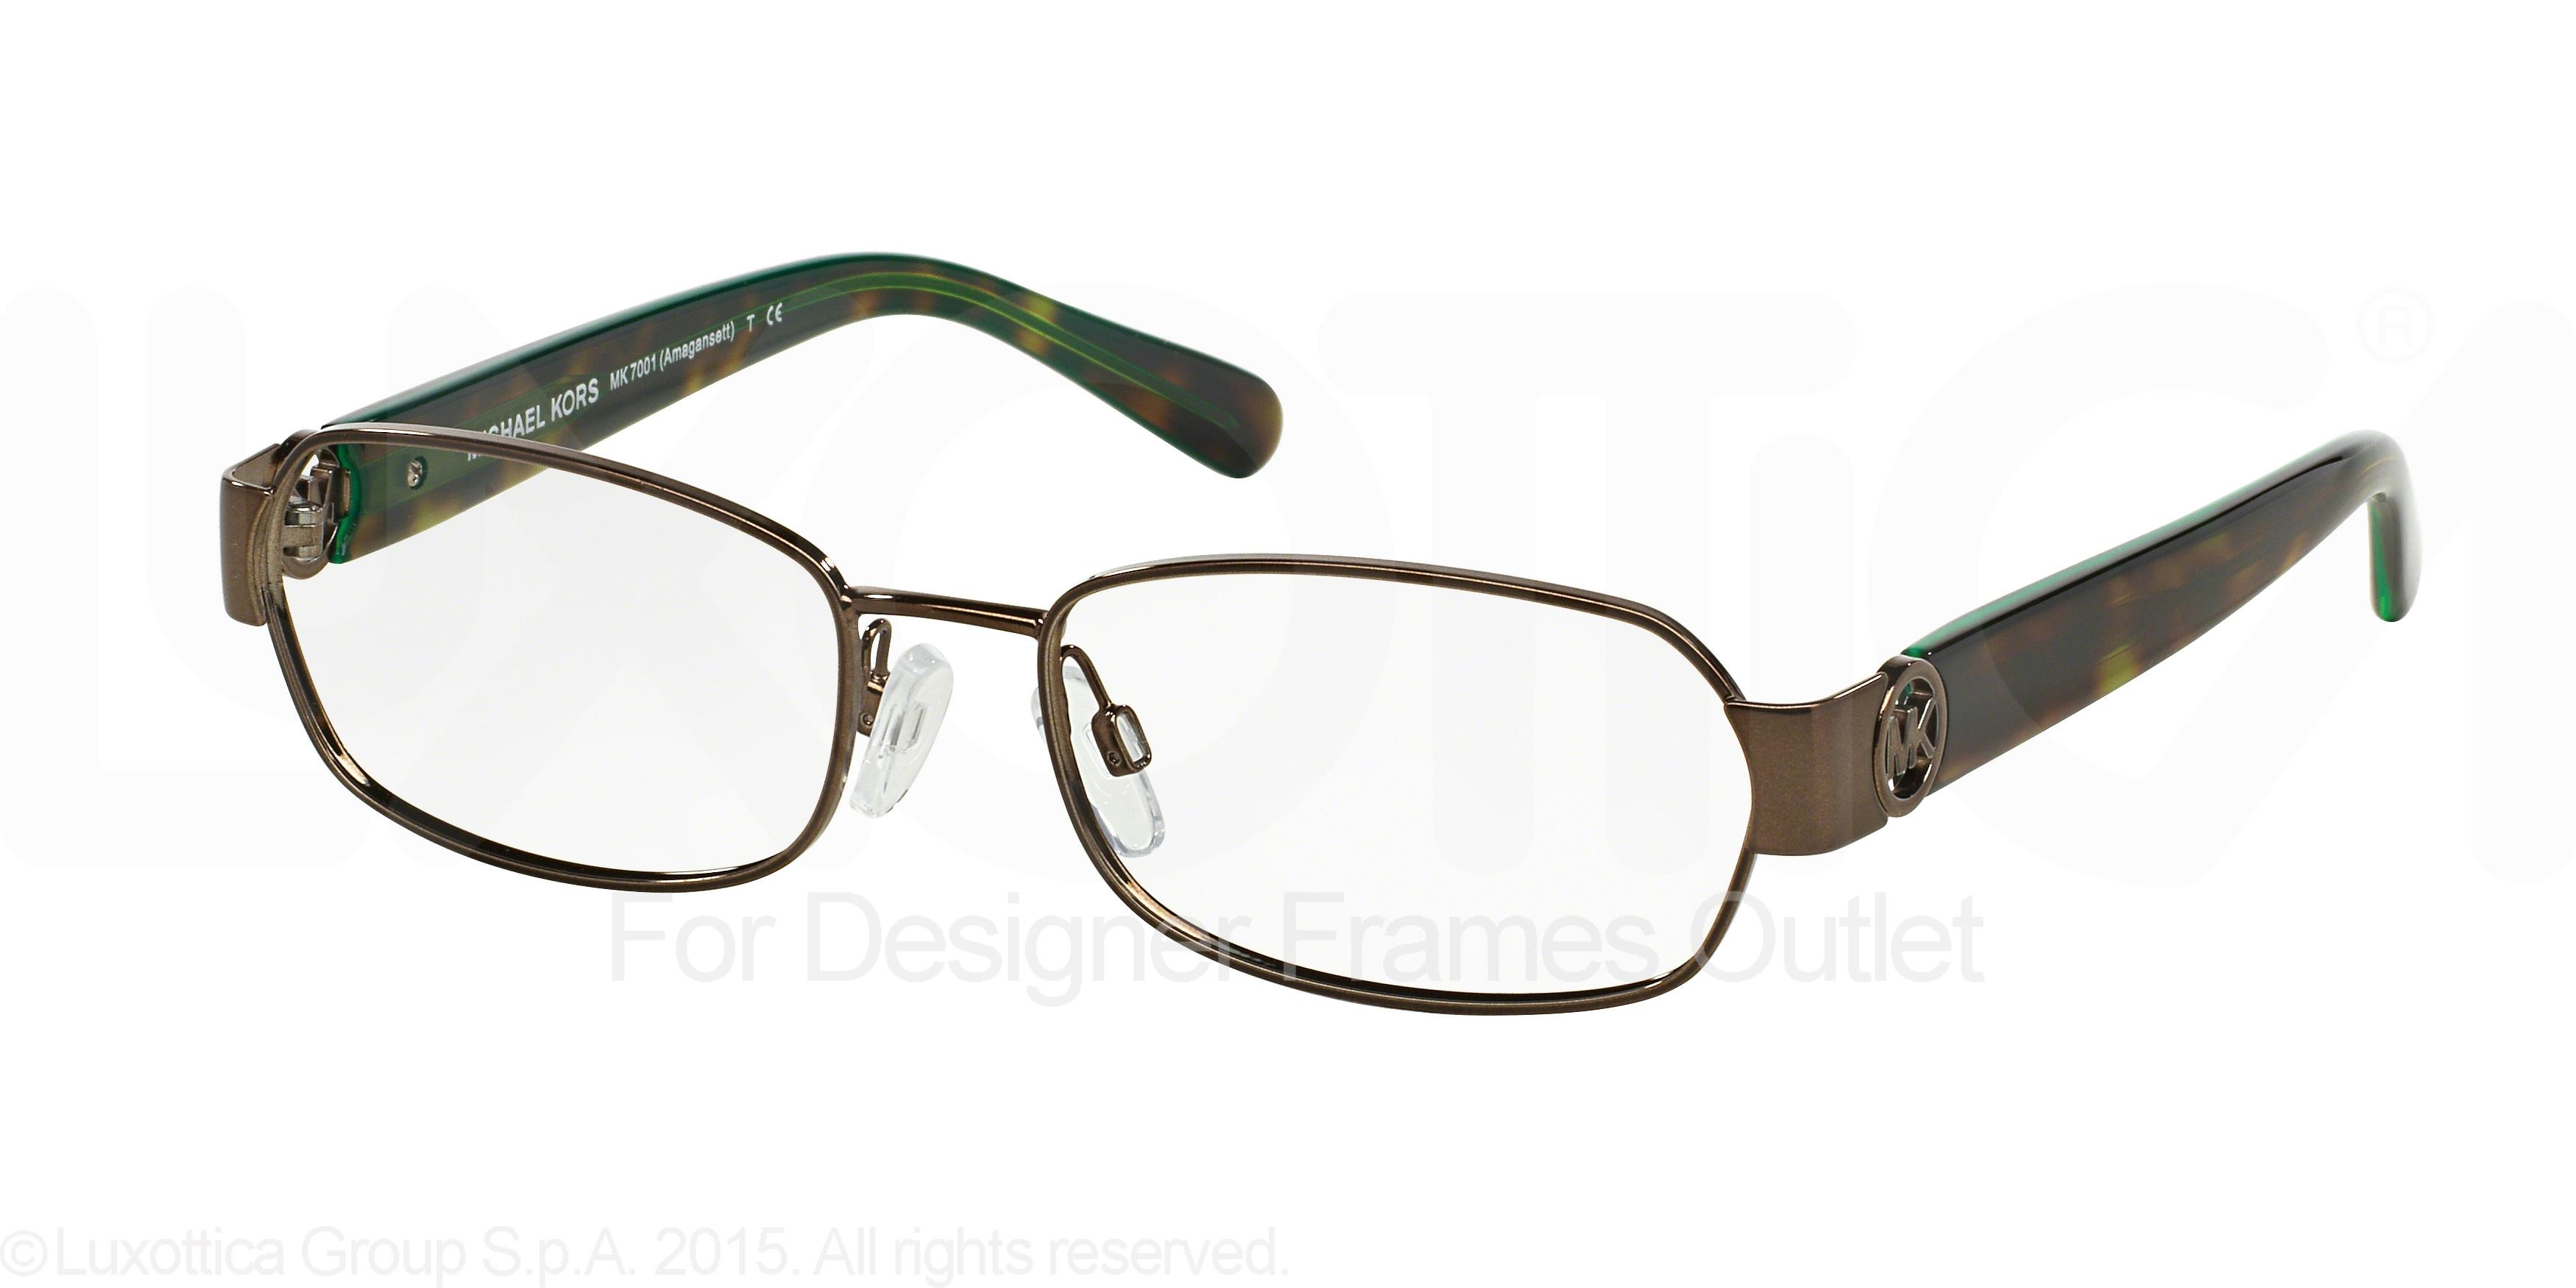 Michael Kors Sunglasses & Glasses: Eyewear